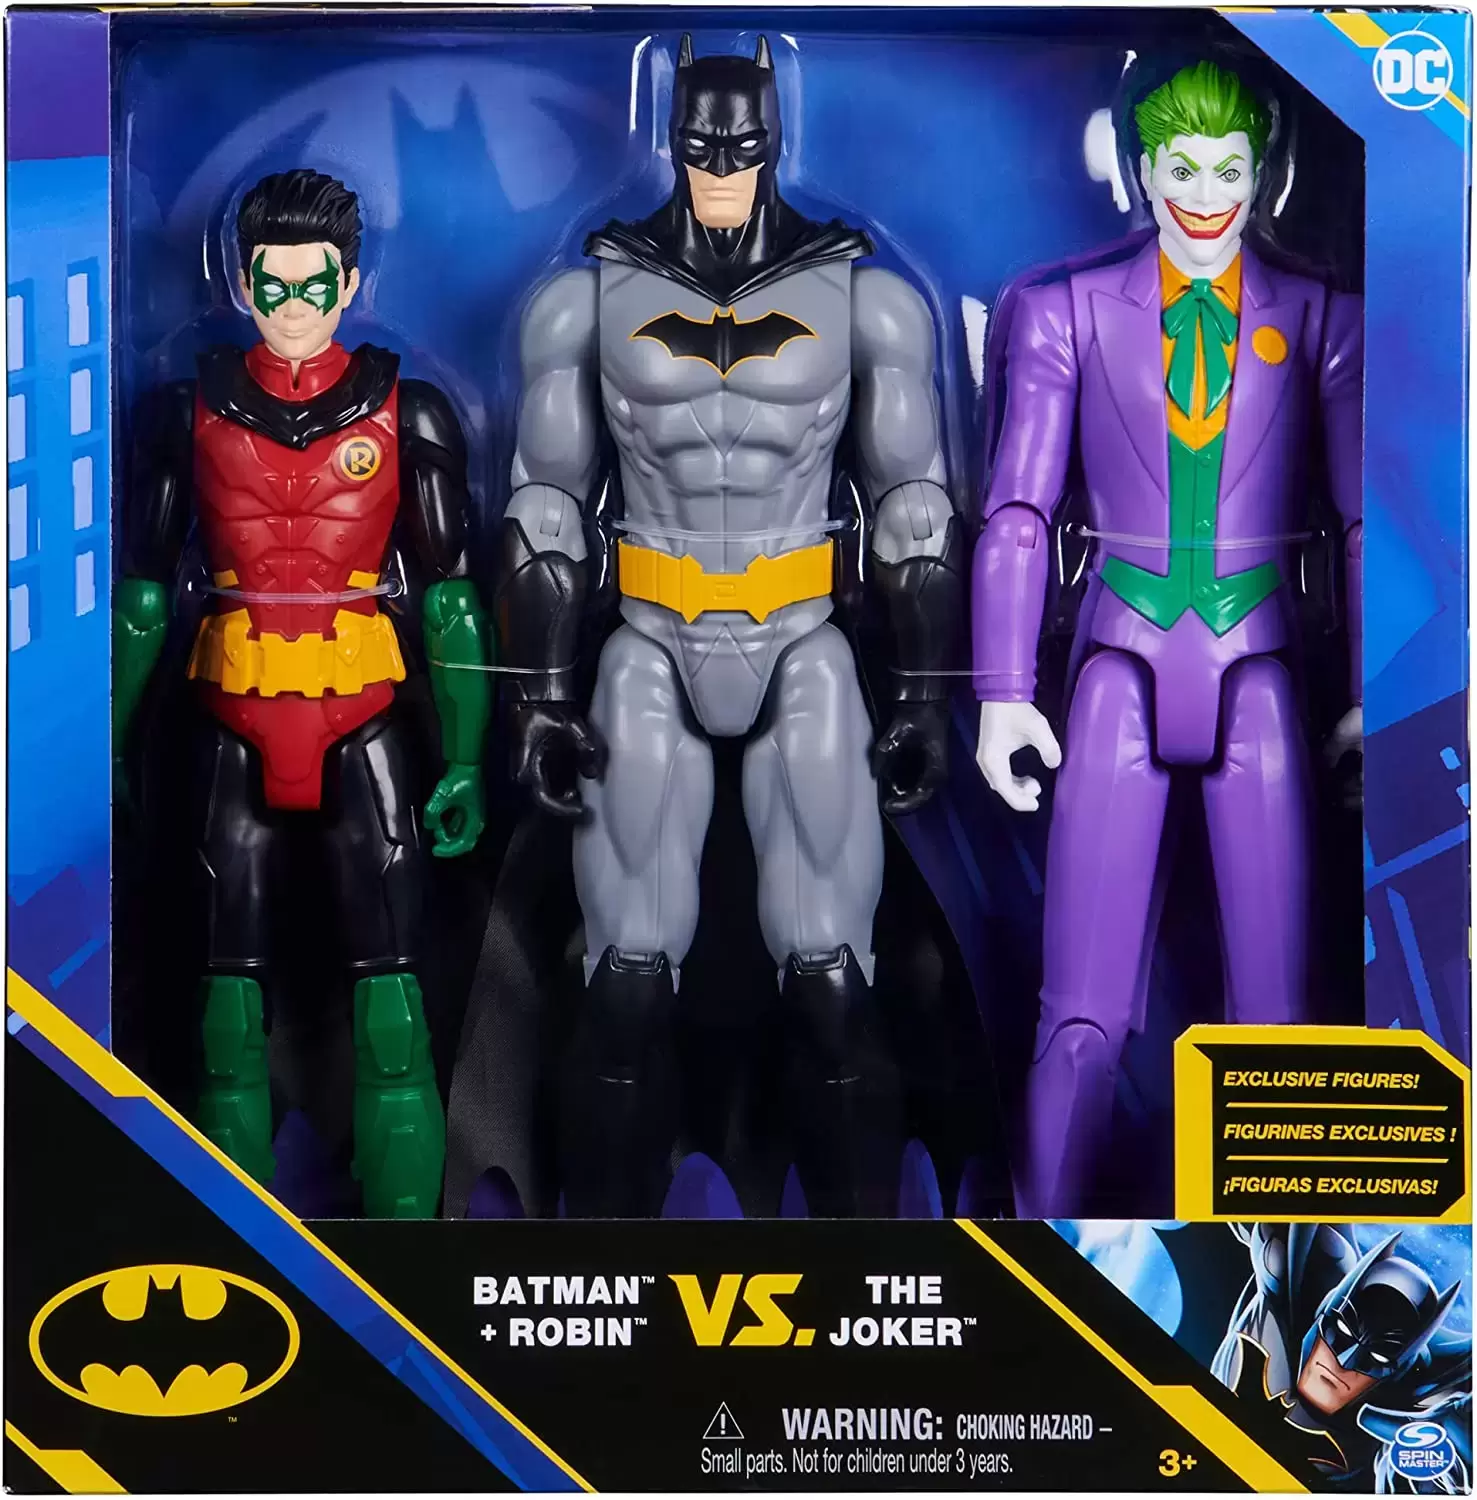 DC by Spin Master - Batman + Robin  VS. The Joker